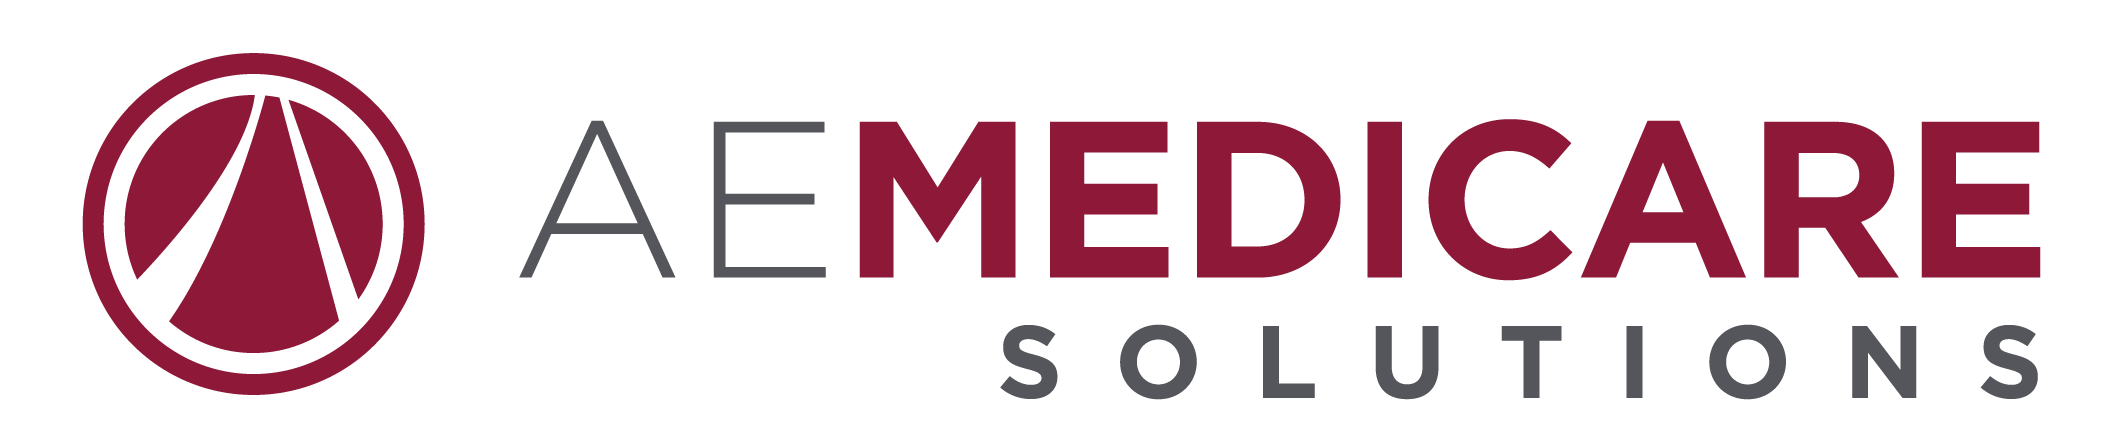 AE-Medicare-Solutions-Logo_burgandy-01